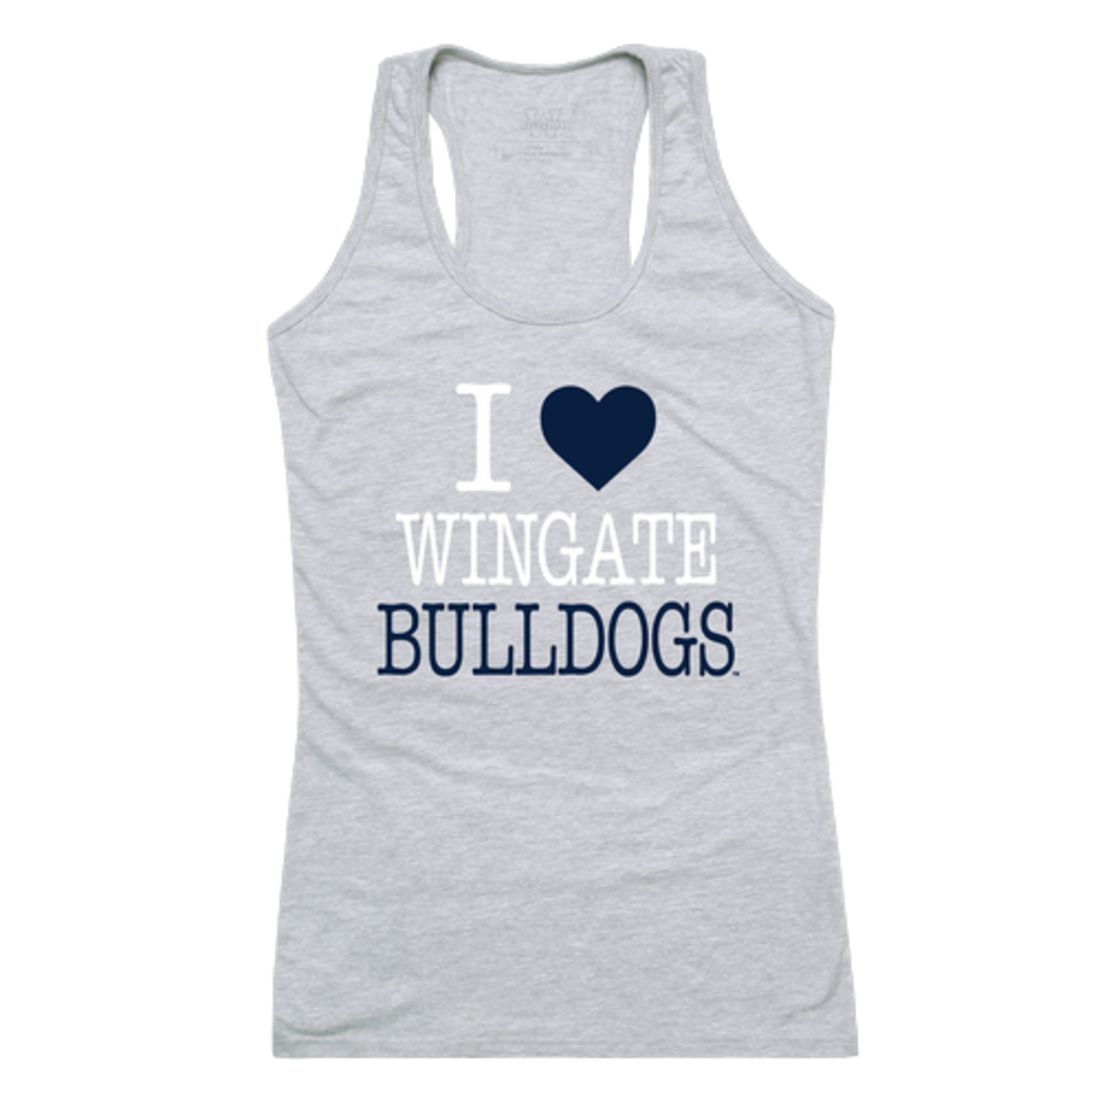 I Love Wingate University Bulldogs Womens Tank Top